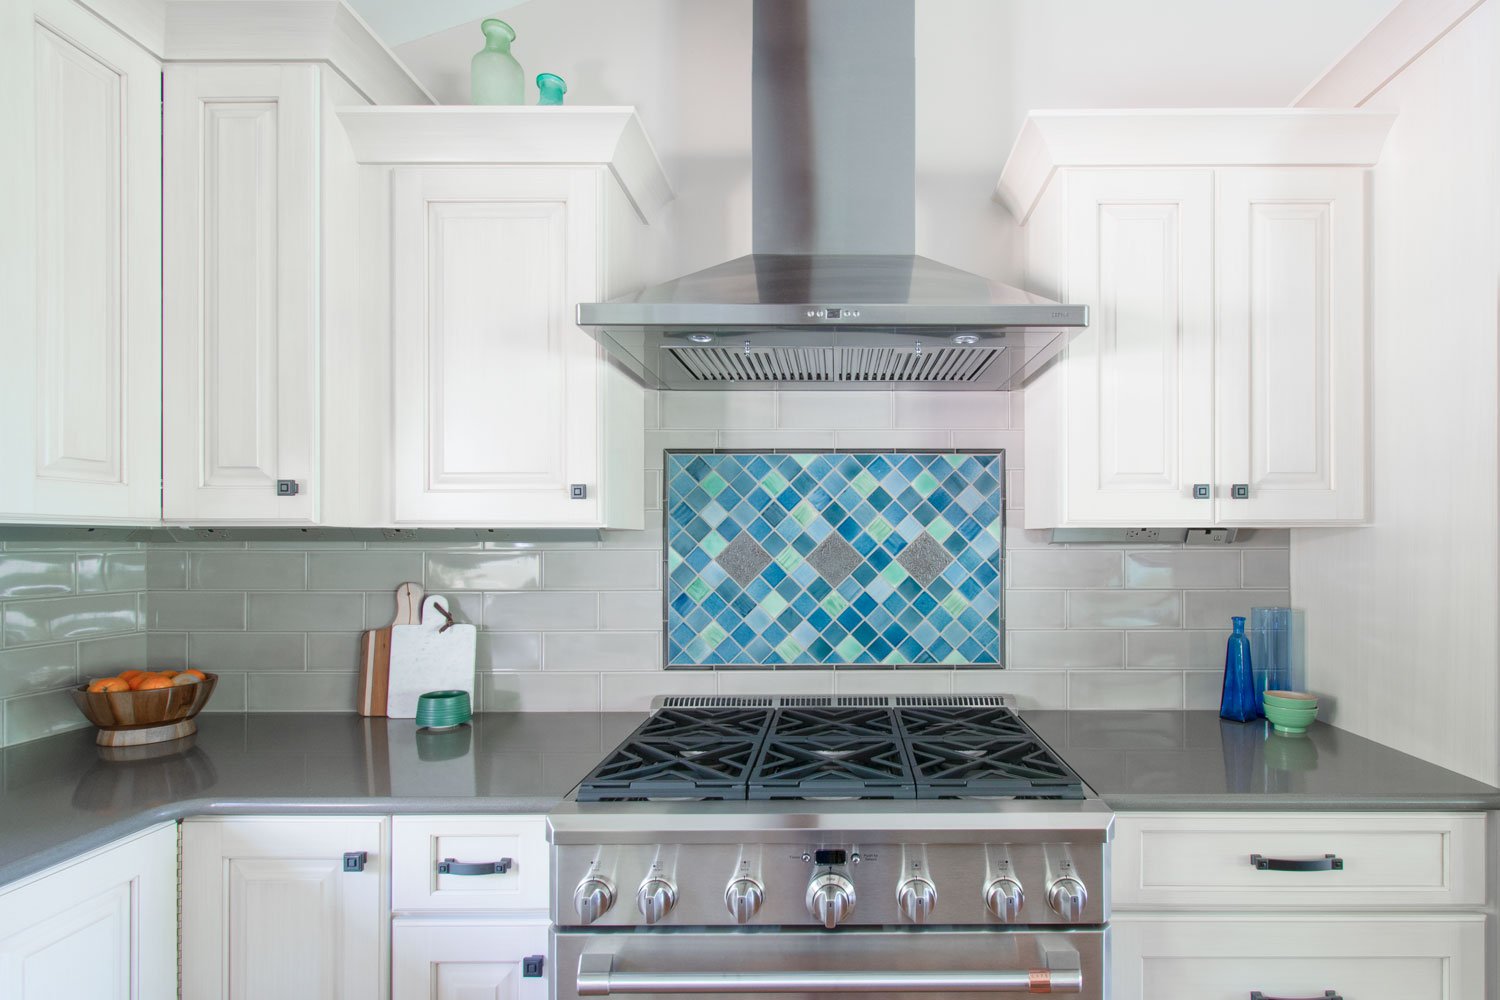 Kitchen Backsplash Ideas From Bold To, Tile Backsplash Behind Stove